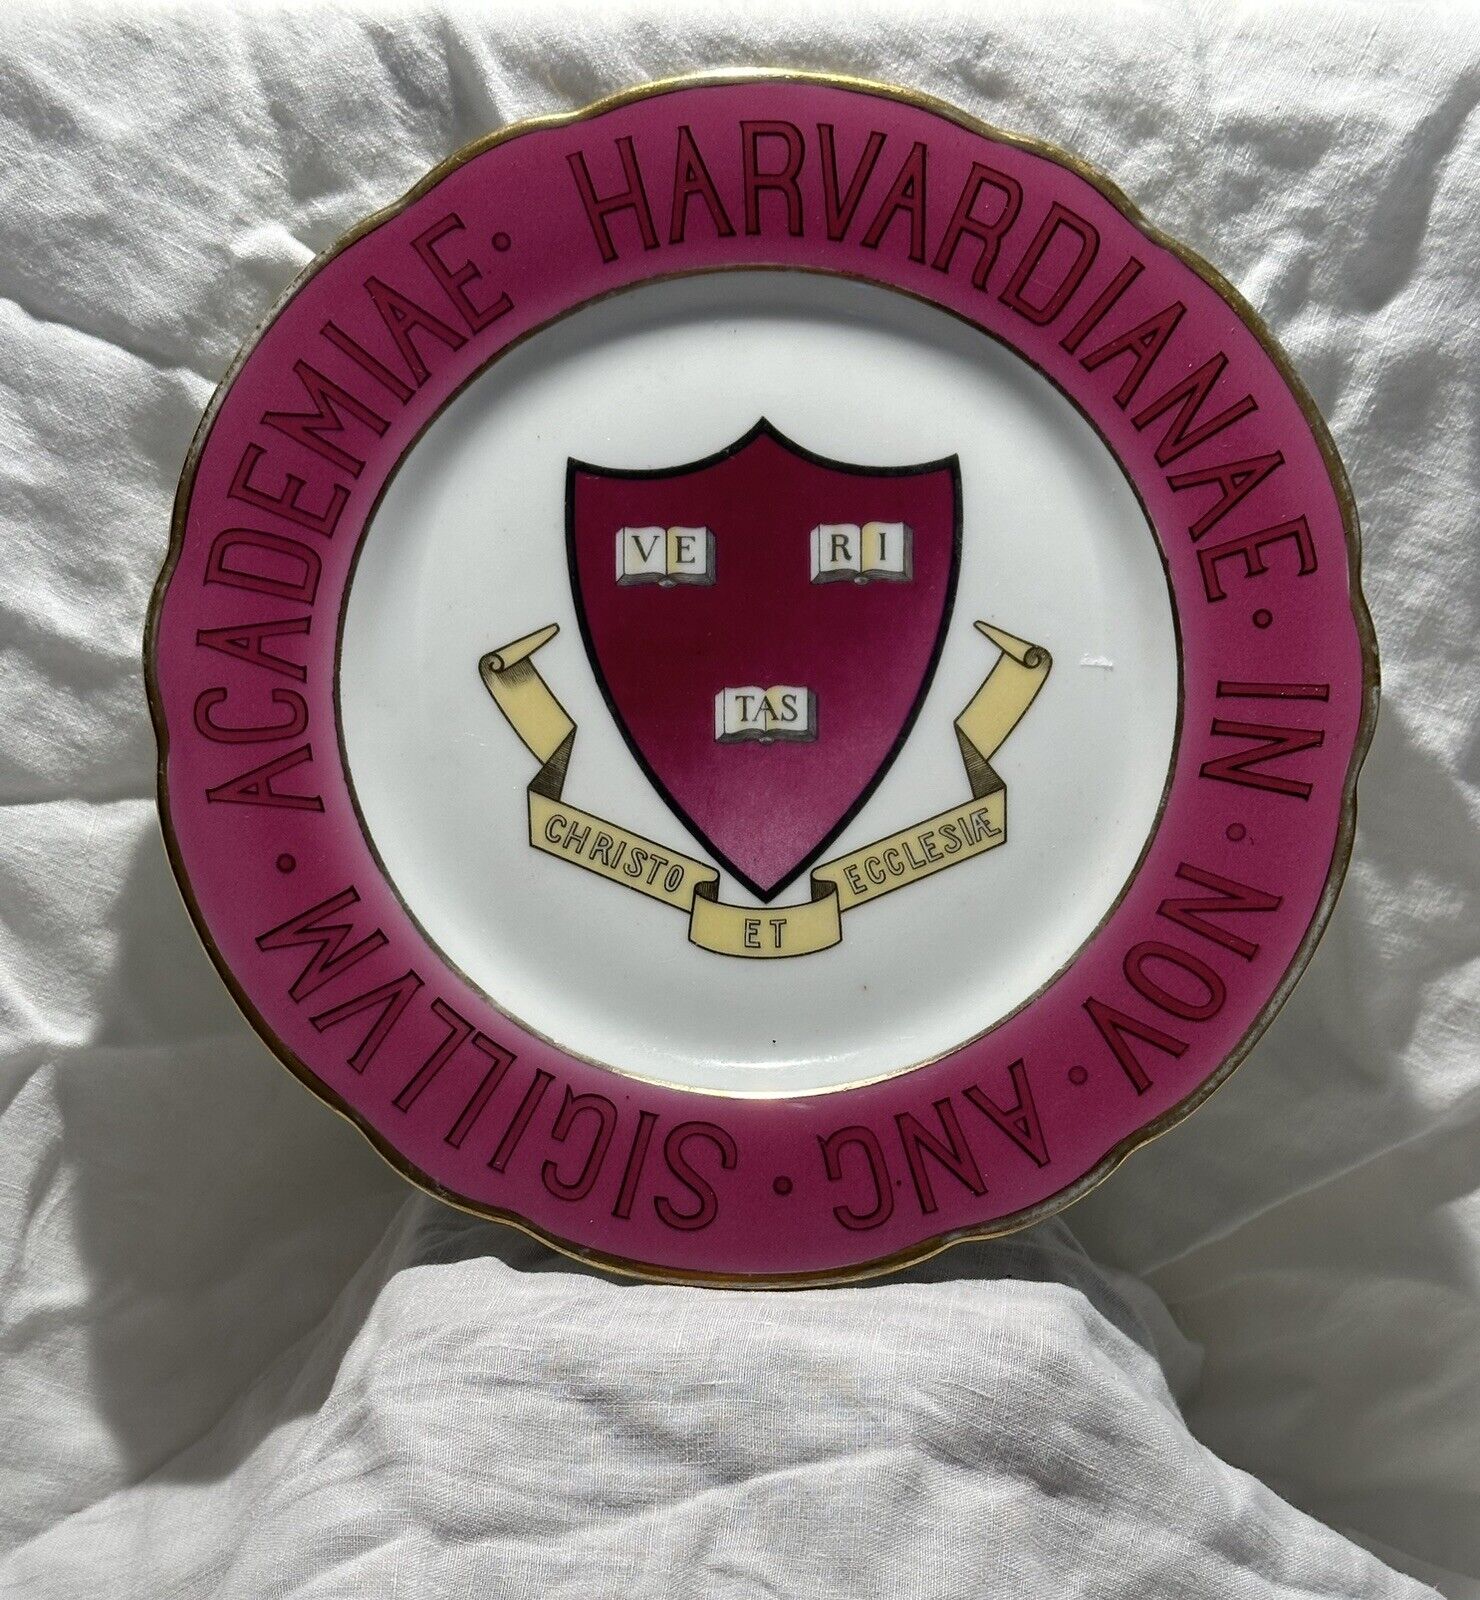 Rare handpainted Harvard plate, CT manufactured